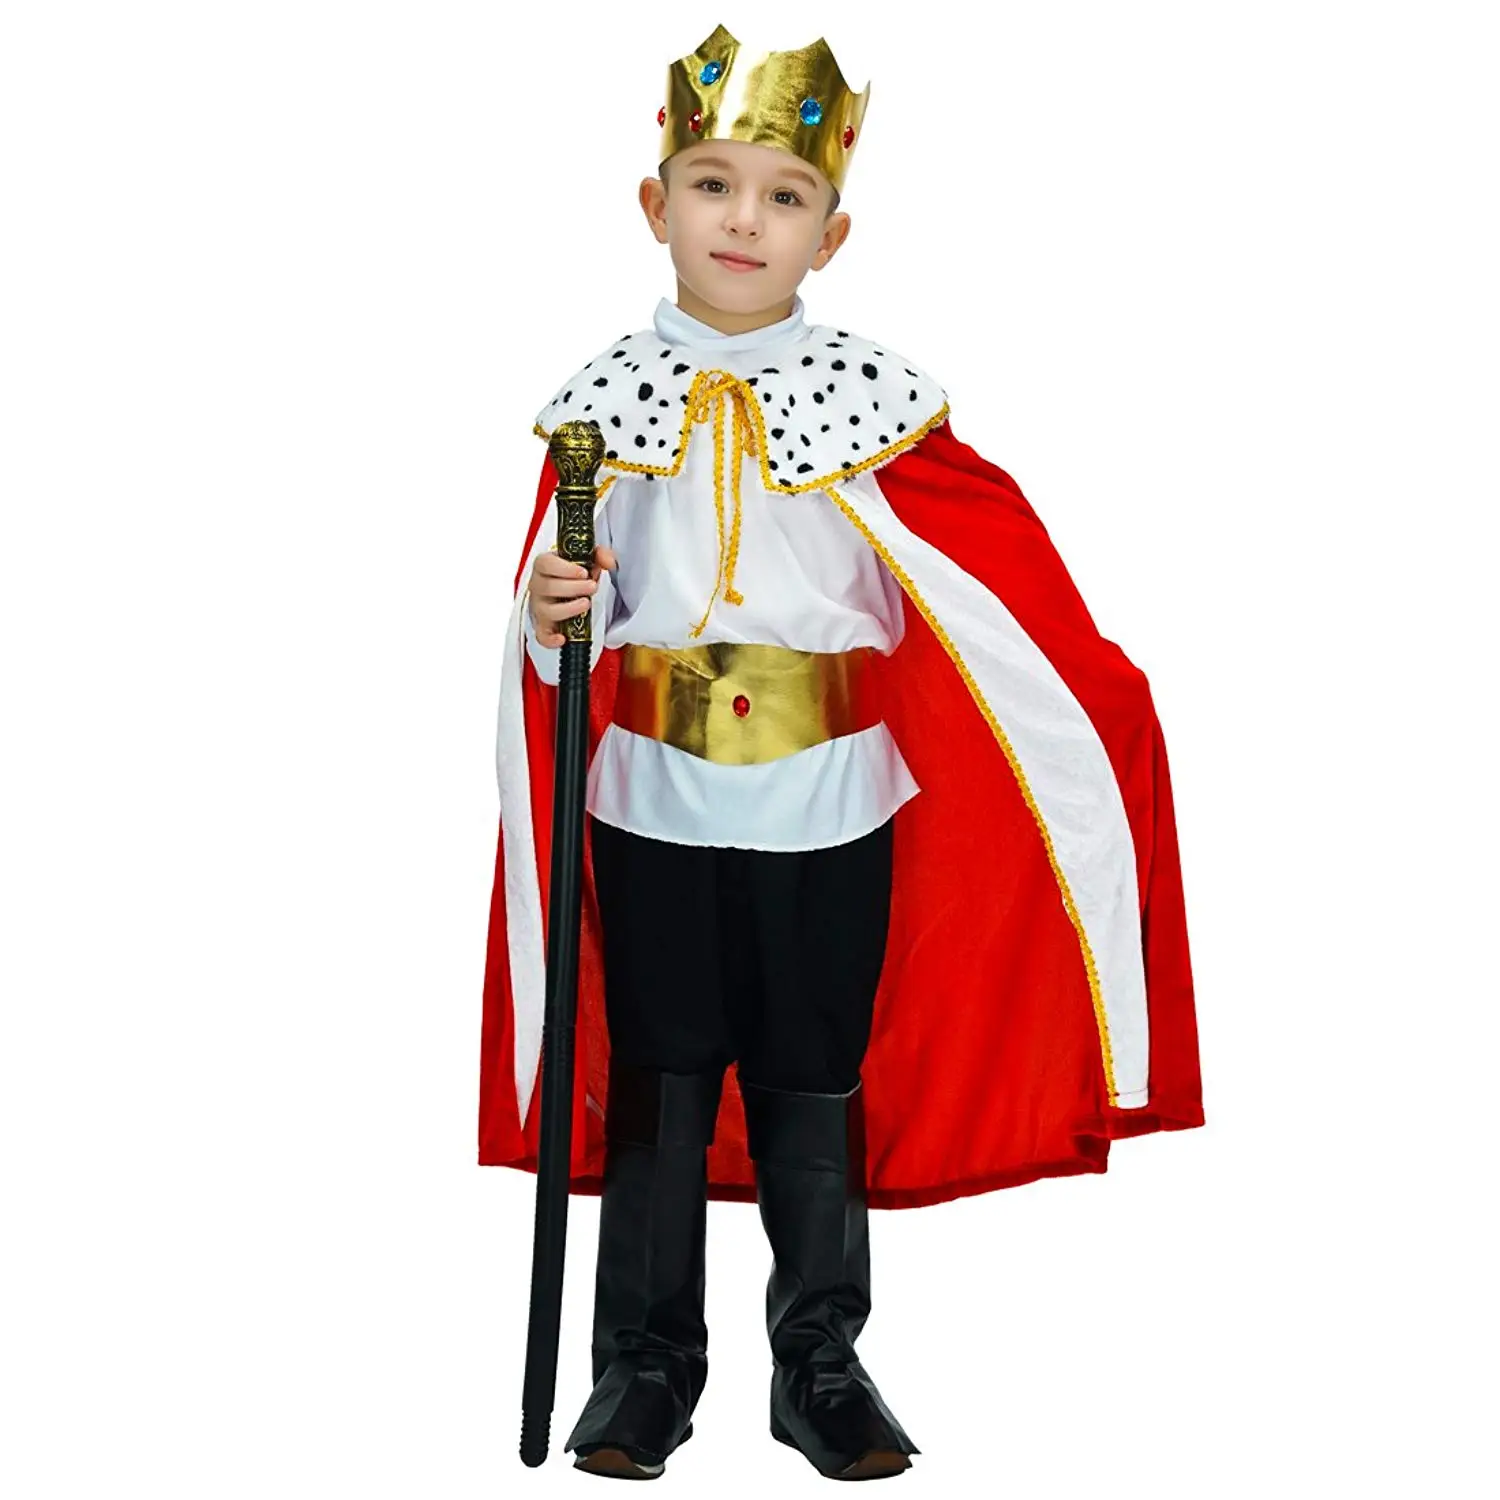 Сценка принца. Костюм короля маленький принц. Костюм принц Карамелькин. Костюм новогодний детский принц Чарминг. Костюм короля для мальчика.